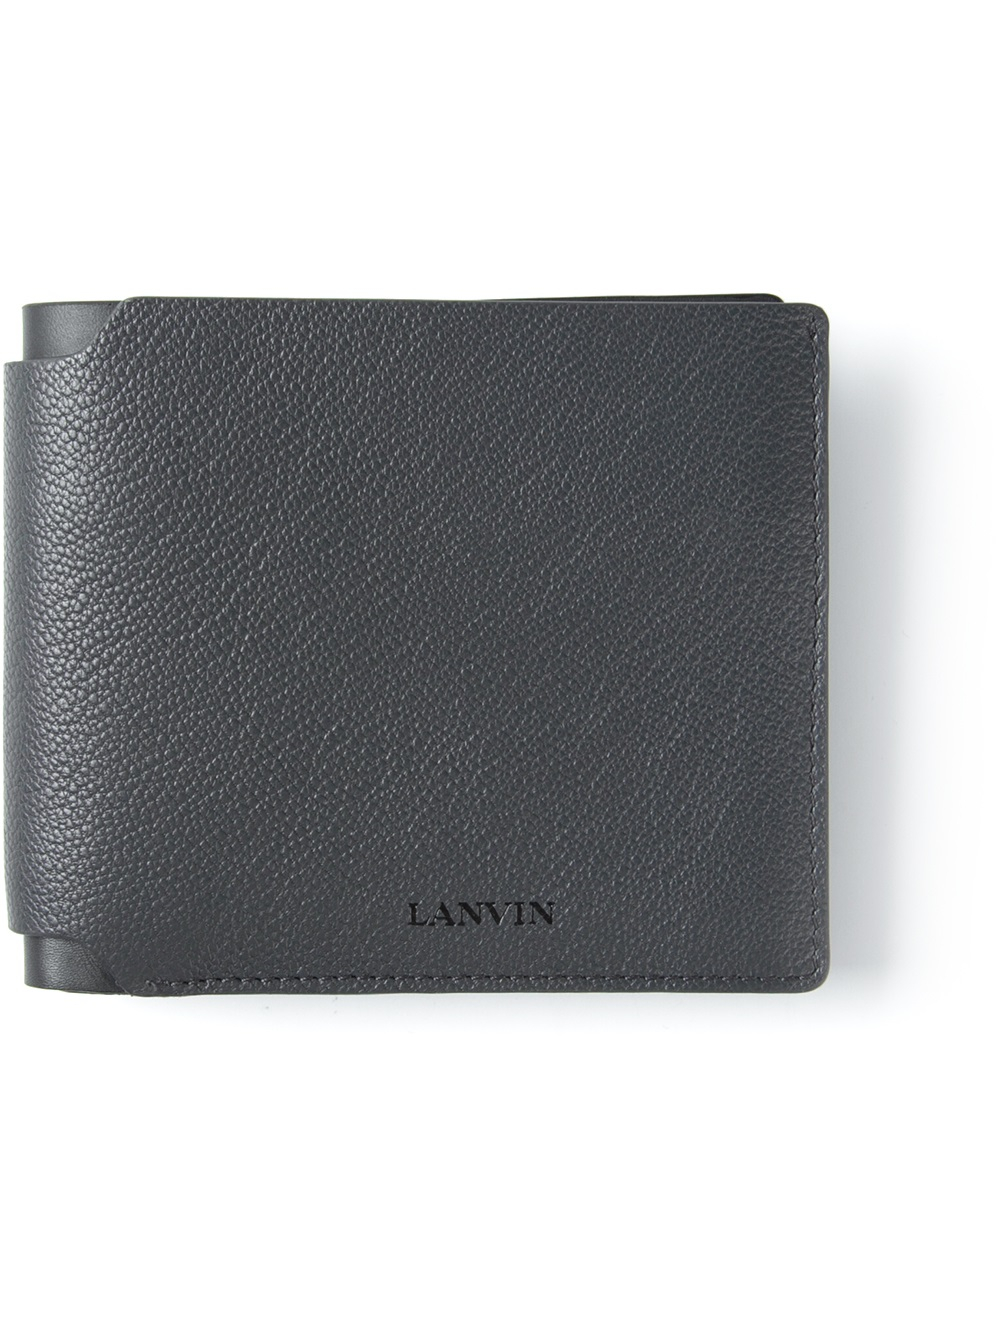 Lanvin Grainy Bifold Wallet in Gray for Men (grey) | Lyst